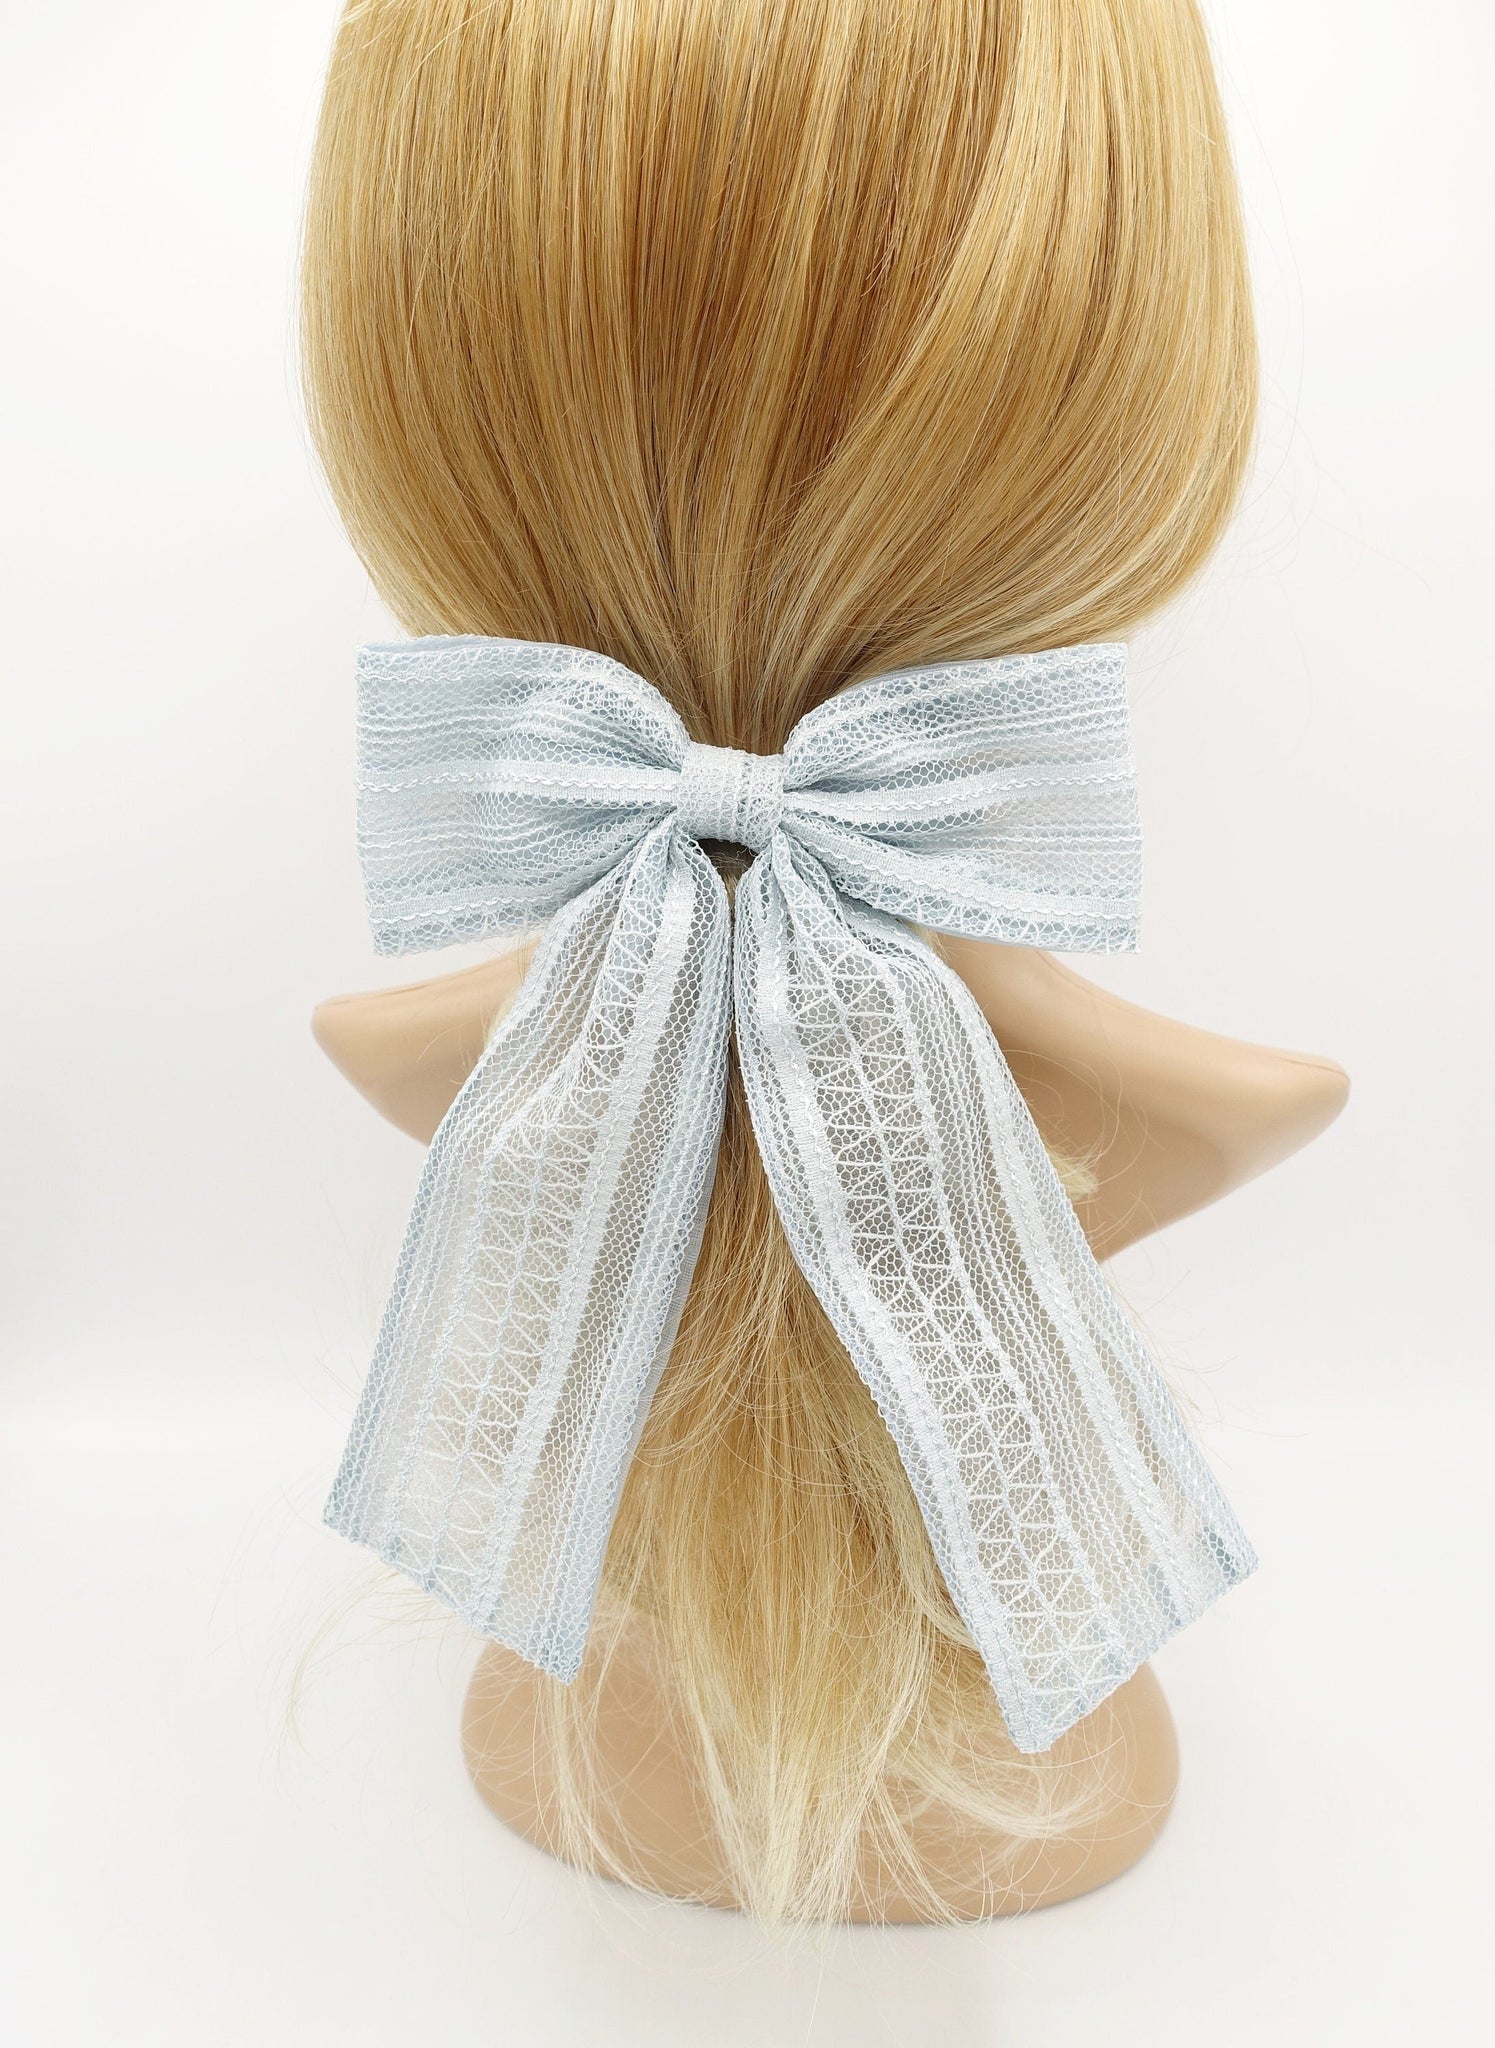 veryshine.com Barrette (Bow) Sky blue mesh lace organza hair bow for women